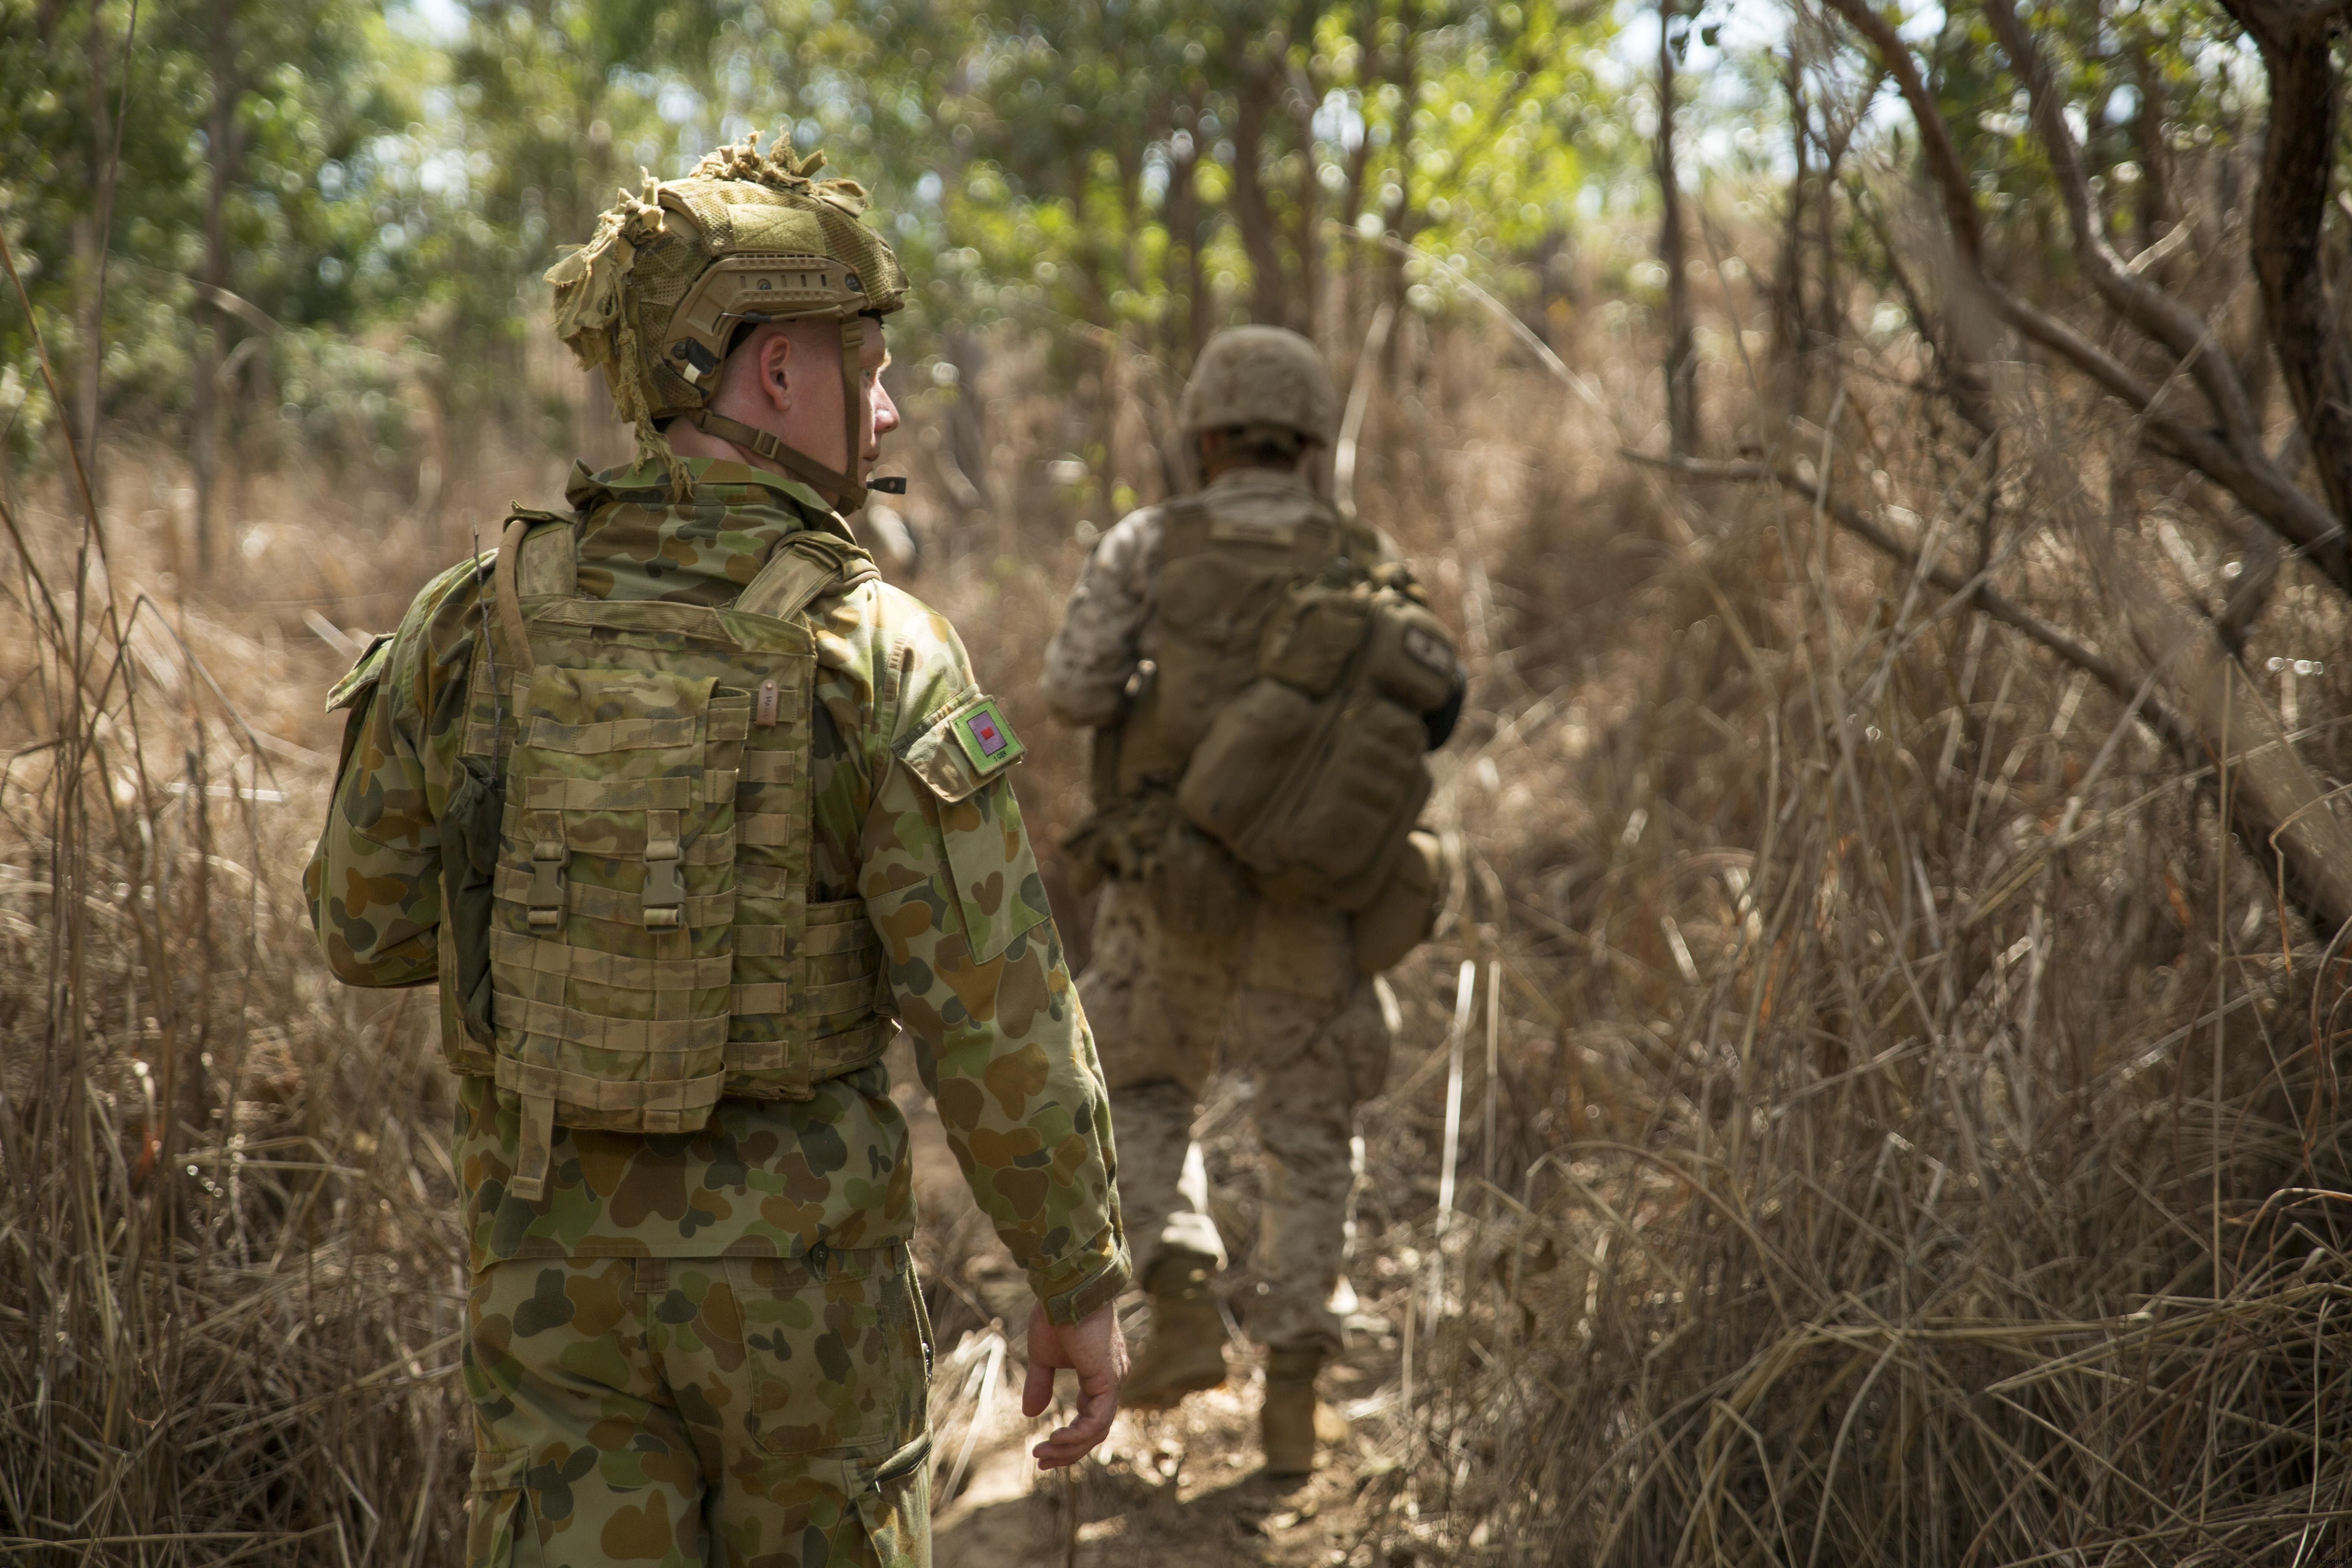 Fondos de pantalla del ejército australiano e imágenes de fondo - stmed.net